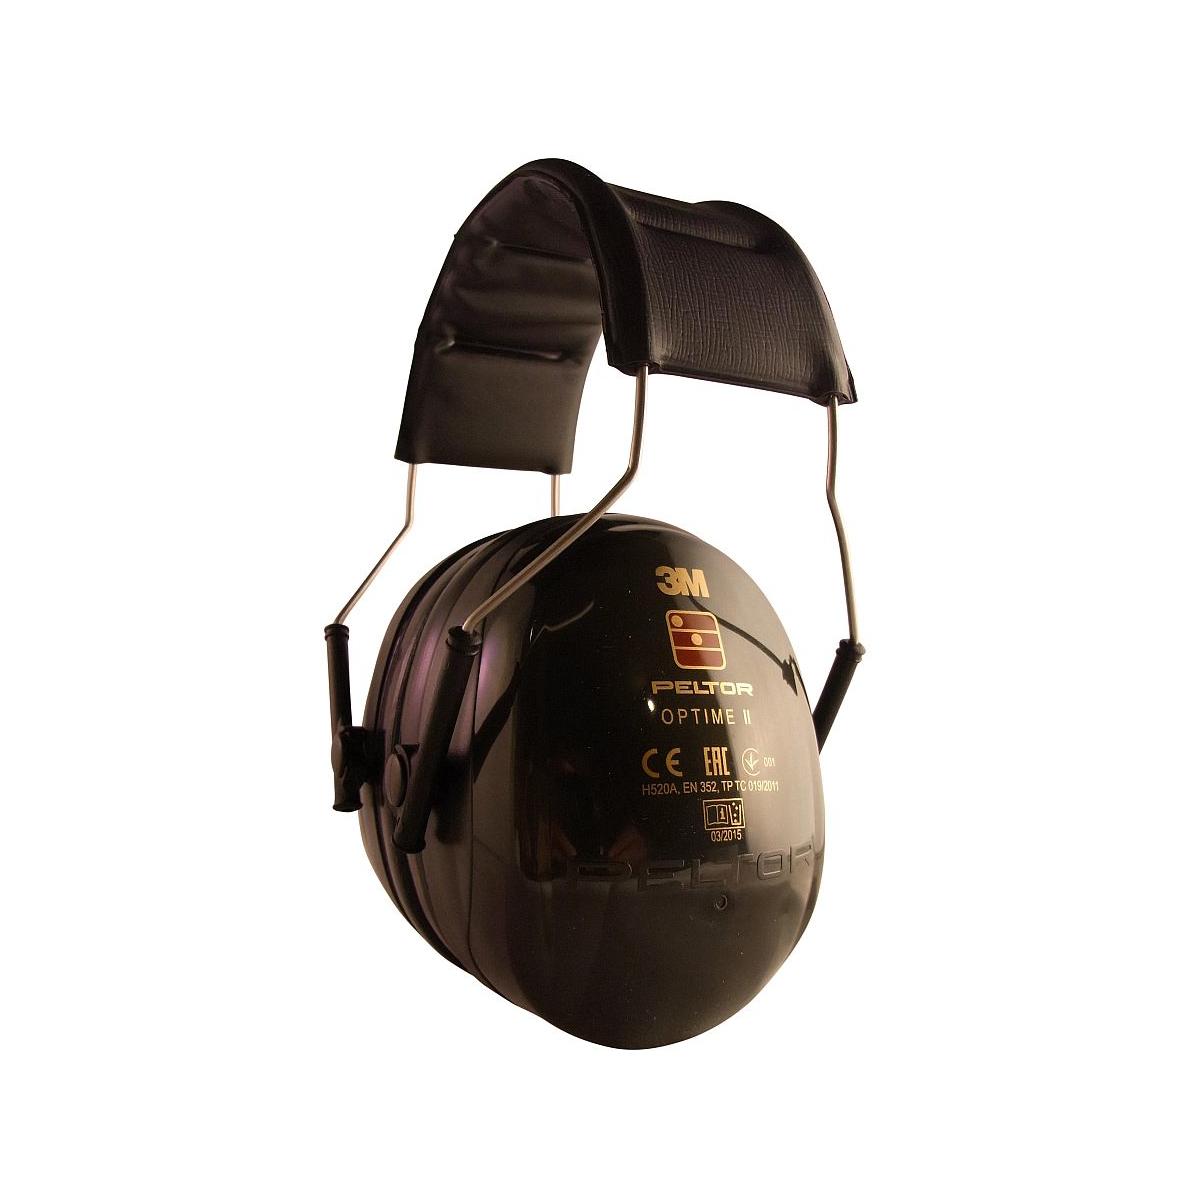 Gehörschutz Peltor Optime 3 Kapselgehörschutz günstig kaufen